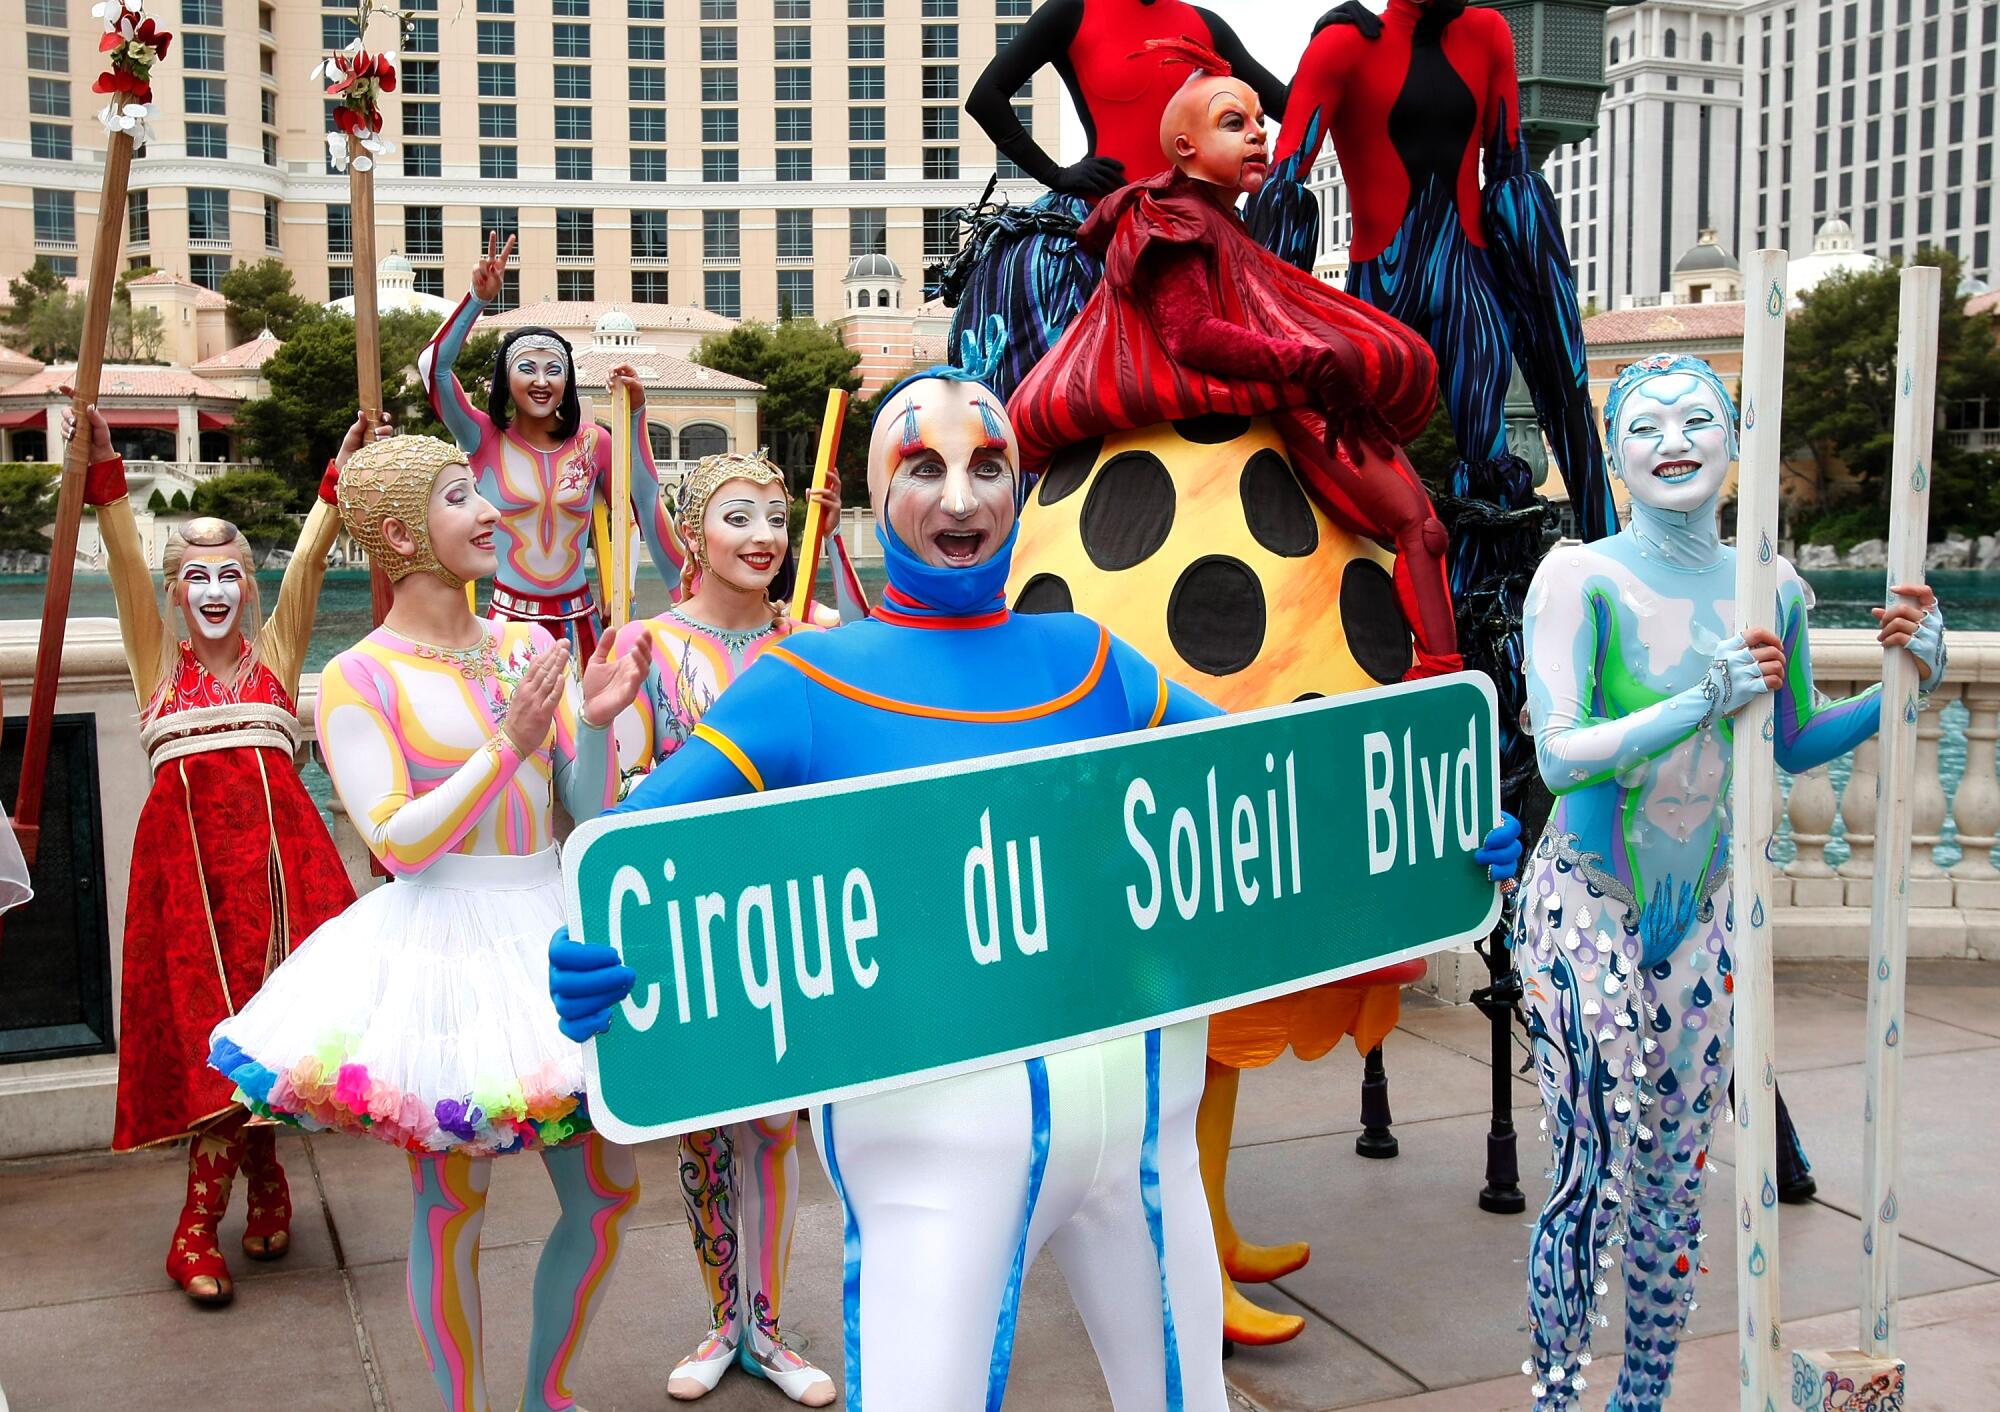 Lady Gaga, Charo, Cirque du Soleil and more Las Vegas showbiz news